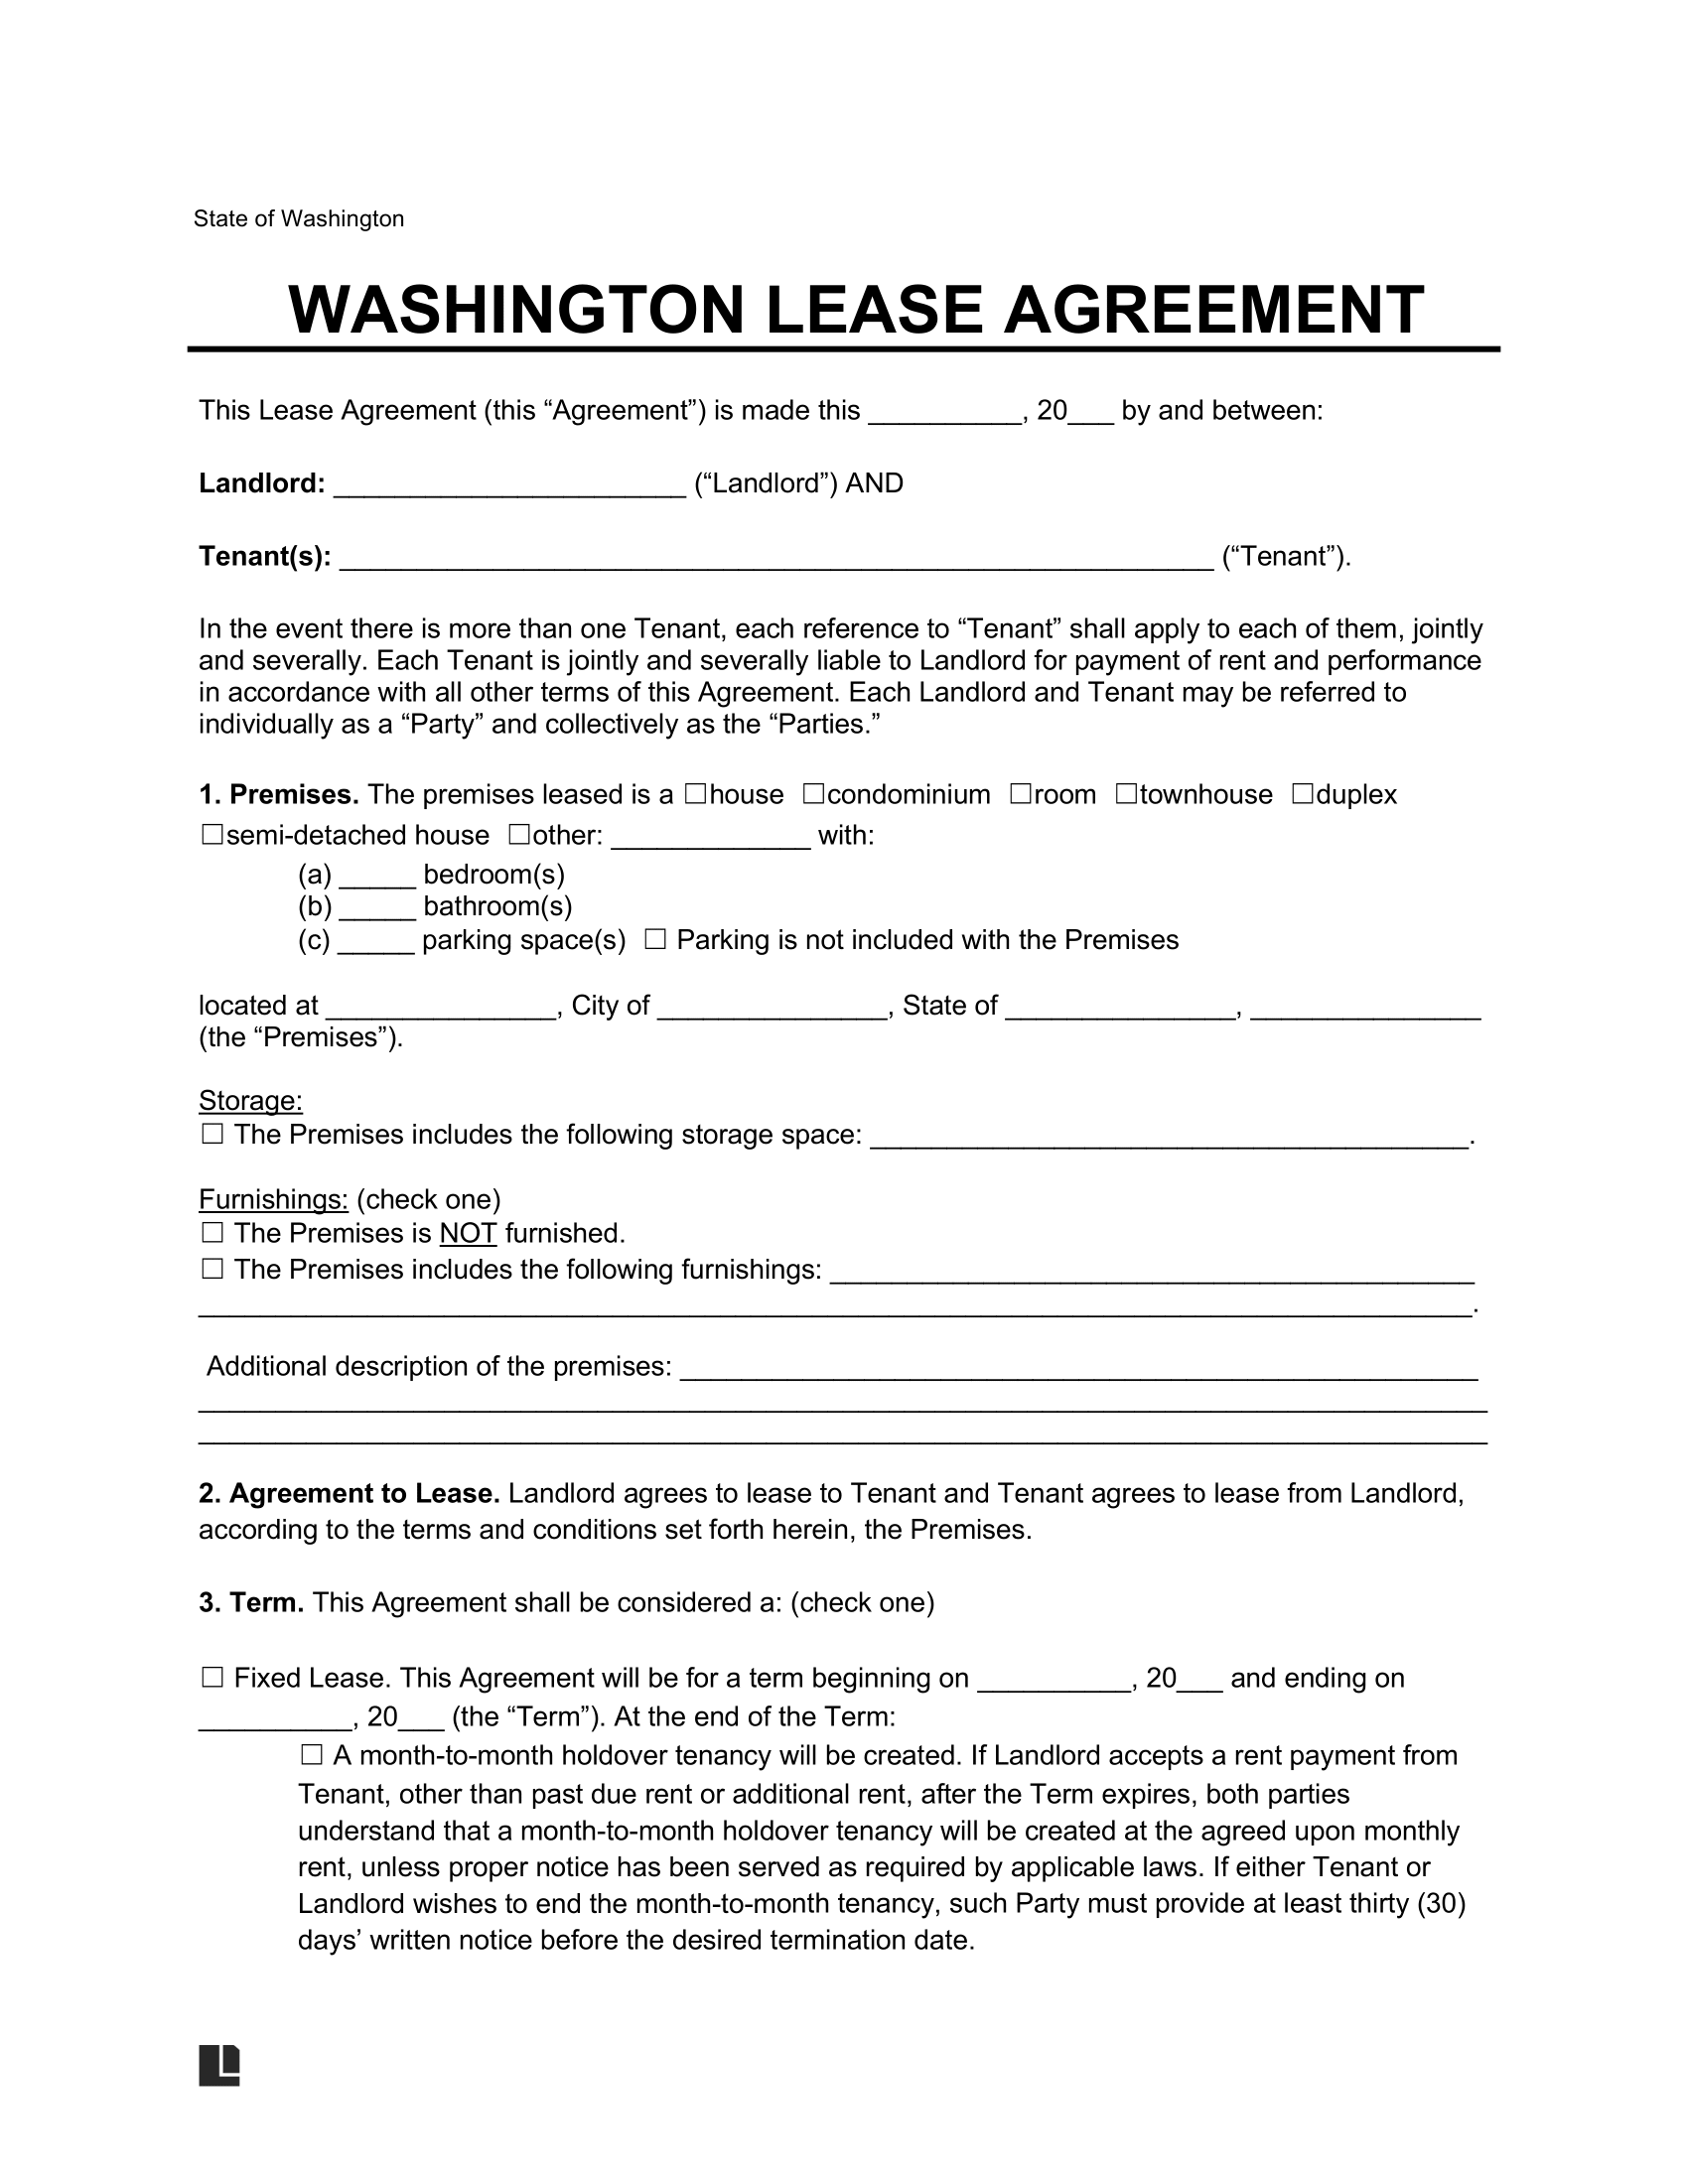 Washington Lease Agreement Template